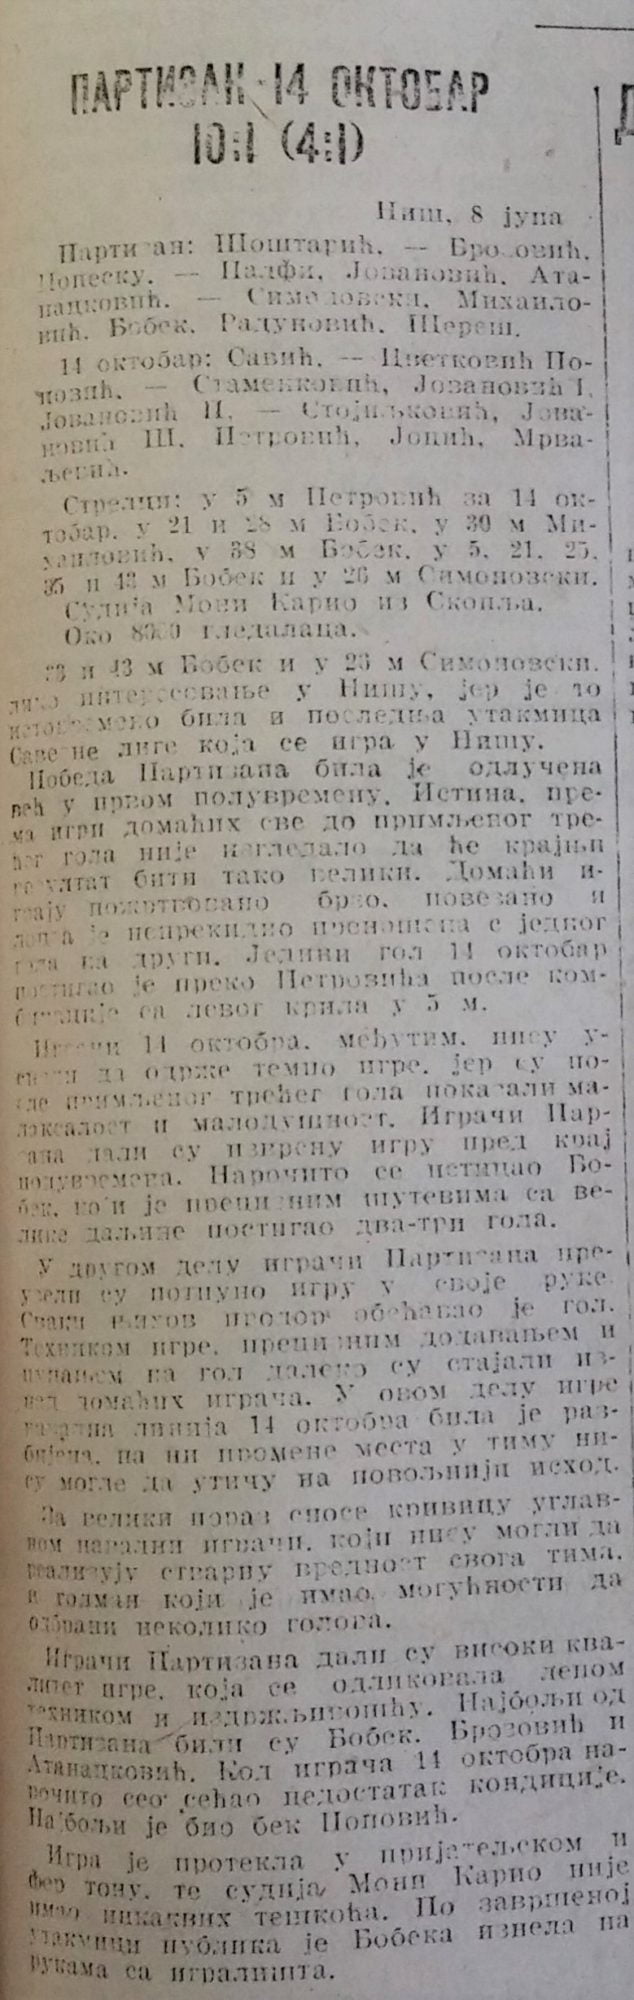 SEZONA 1946/47  24.kolo-08.06.1947.-14.oktobar-Partizan-1-10